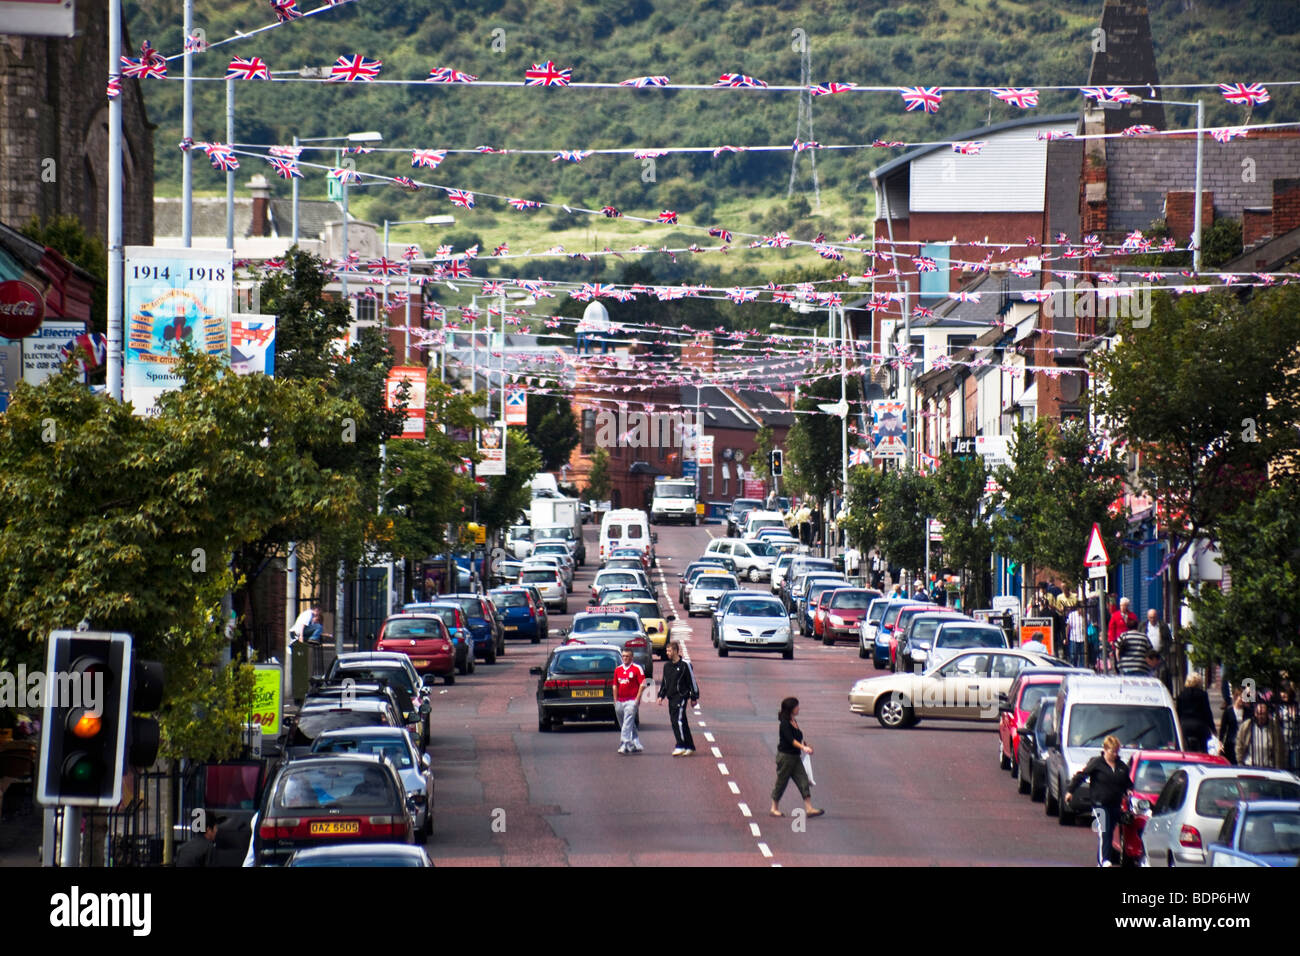 The Shankill Road,  Belfast, Northern Ireland Stock Photo